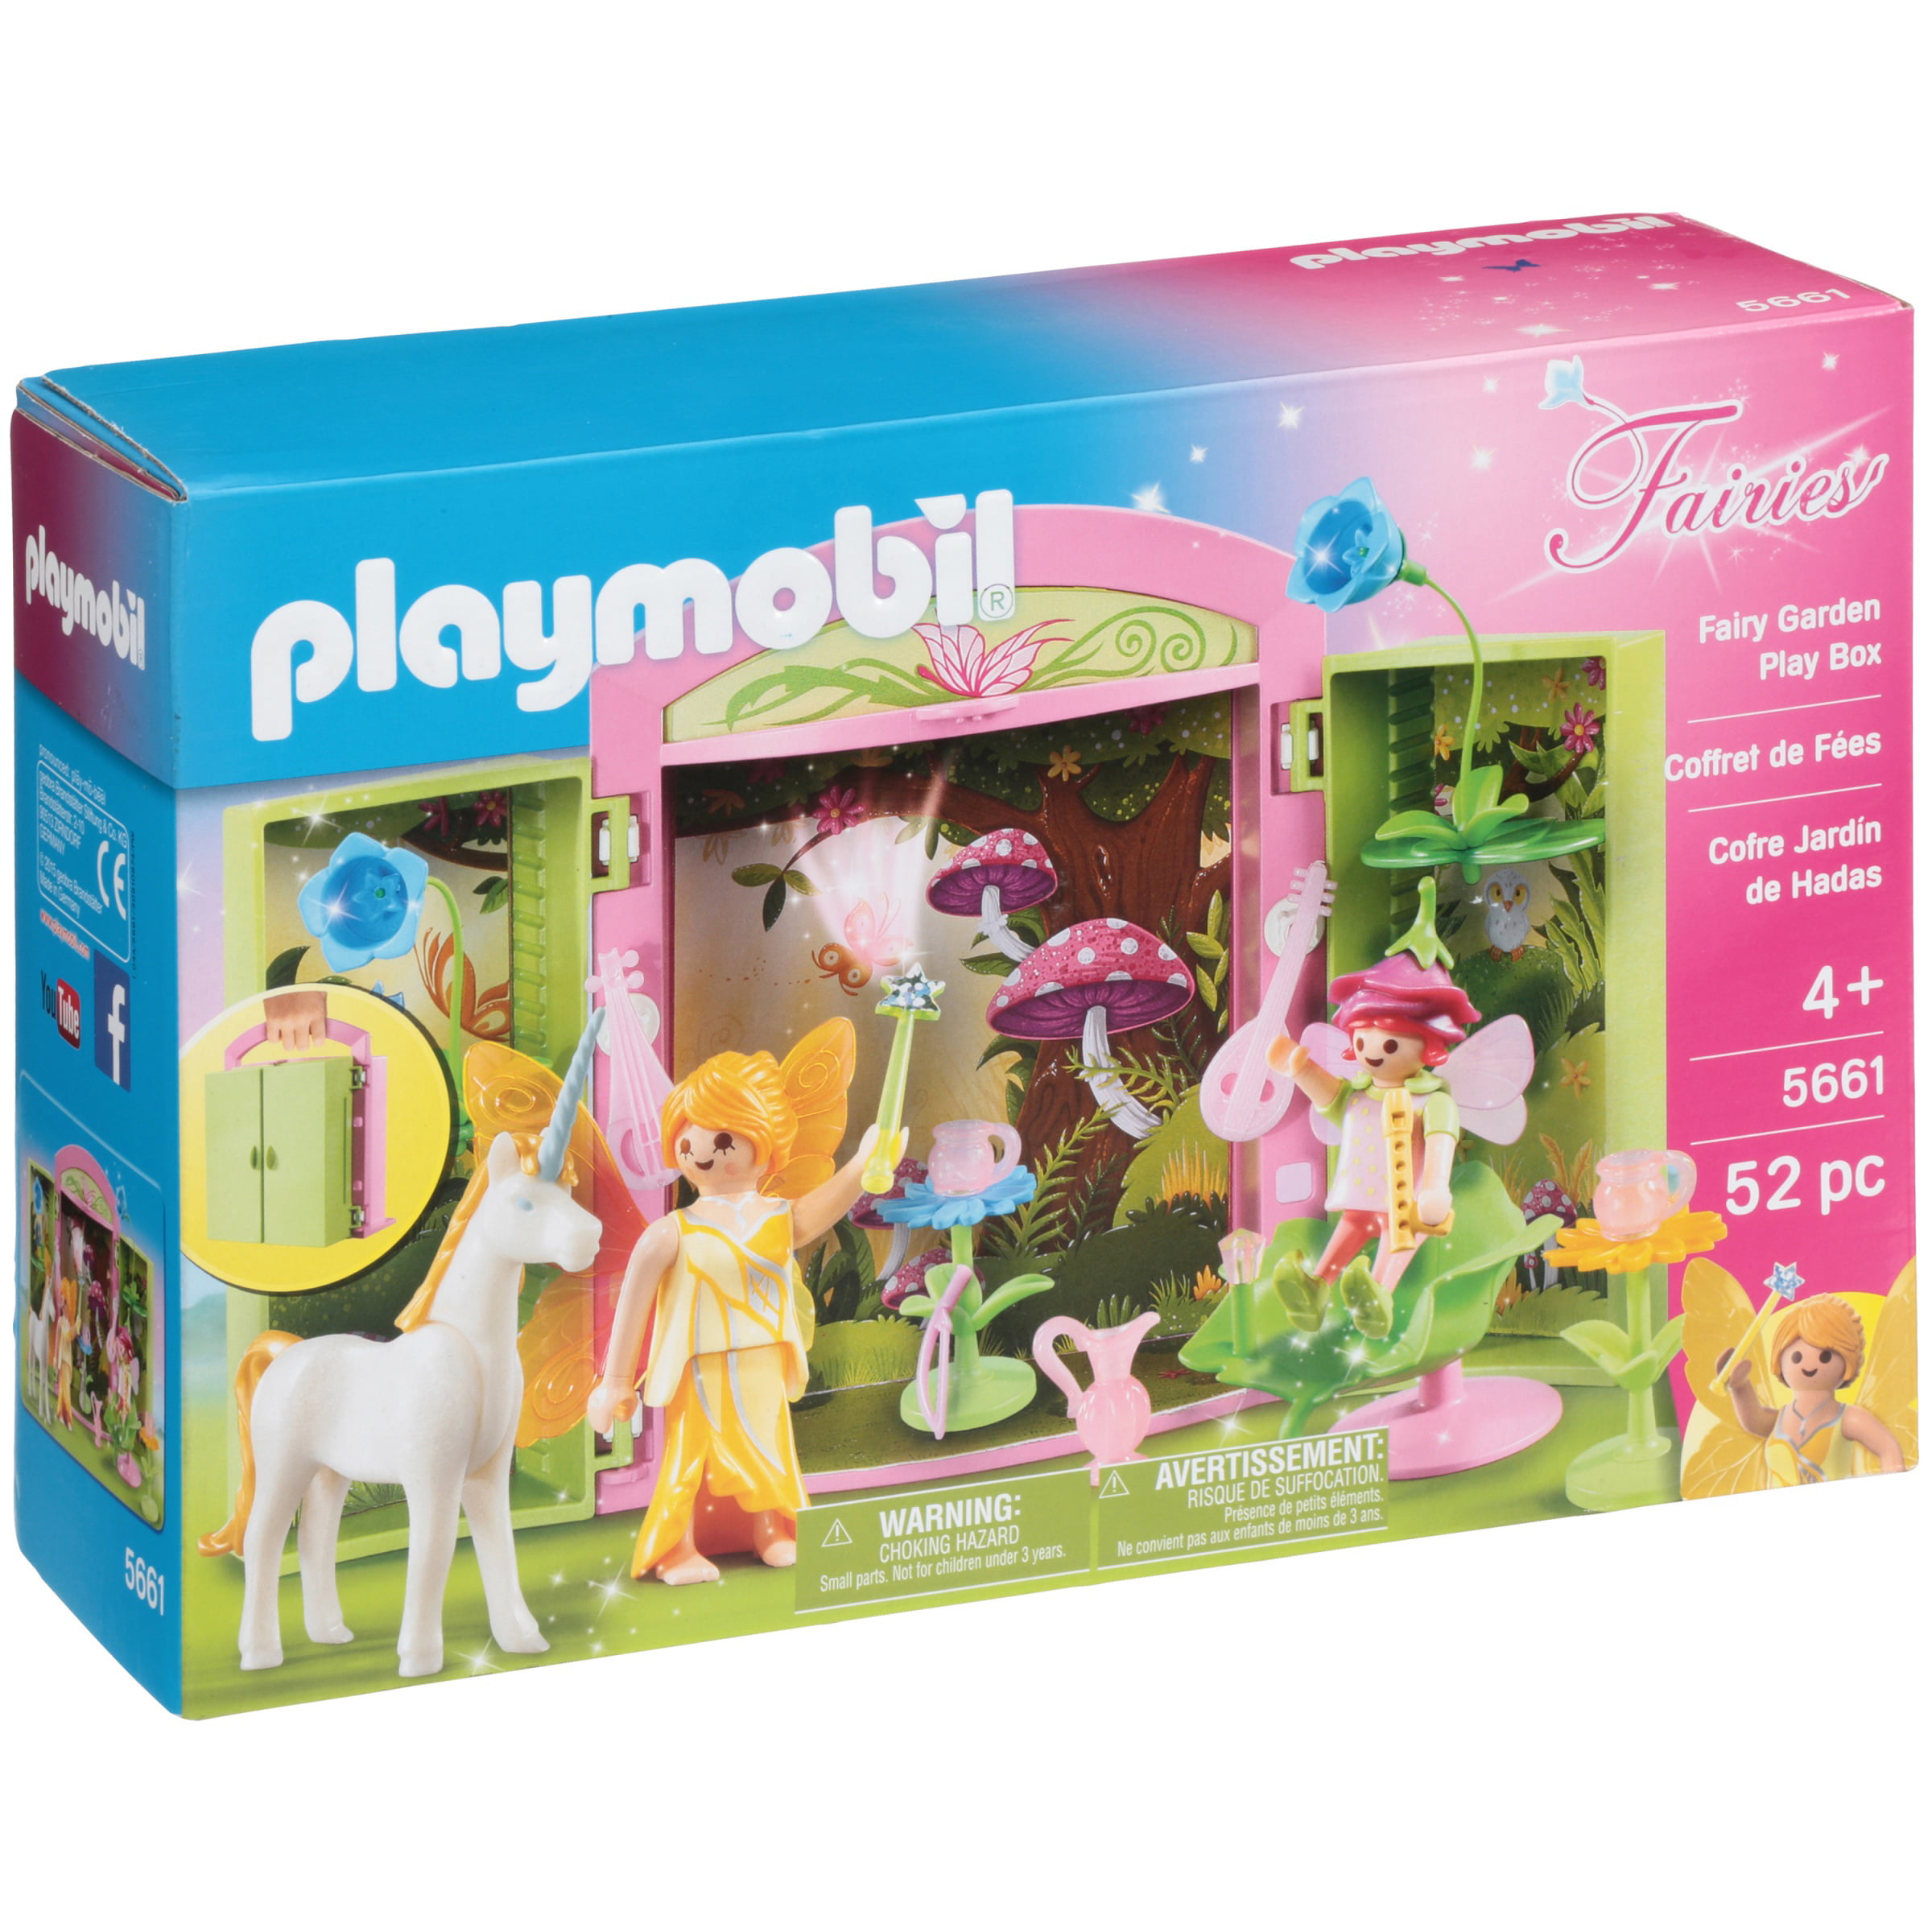 PLAYMOBIL Fairy Garden Play Box